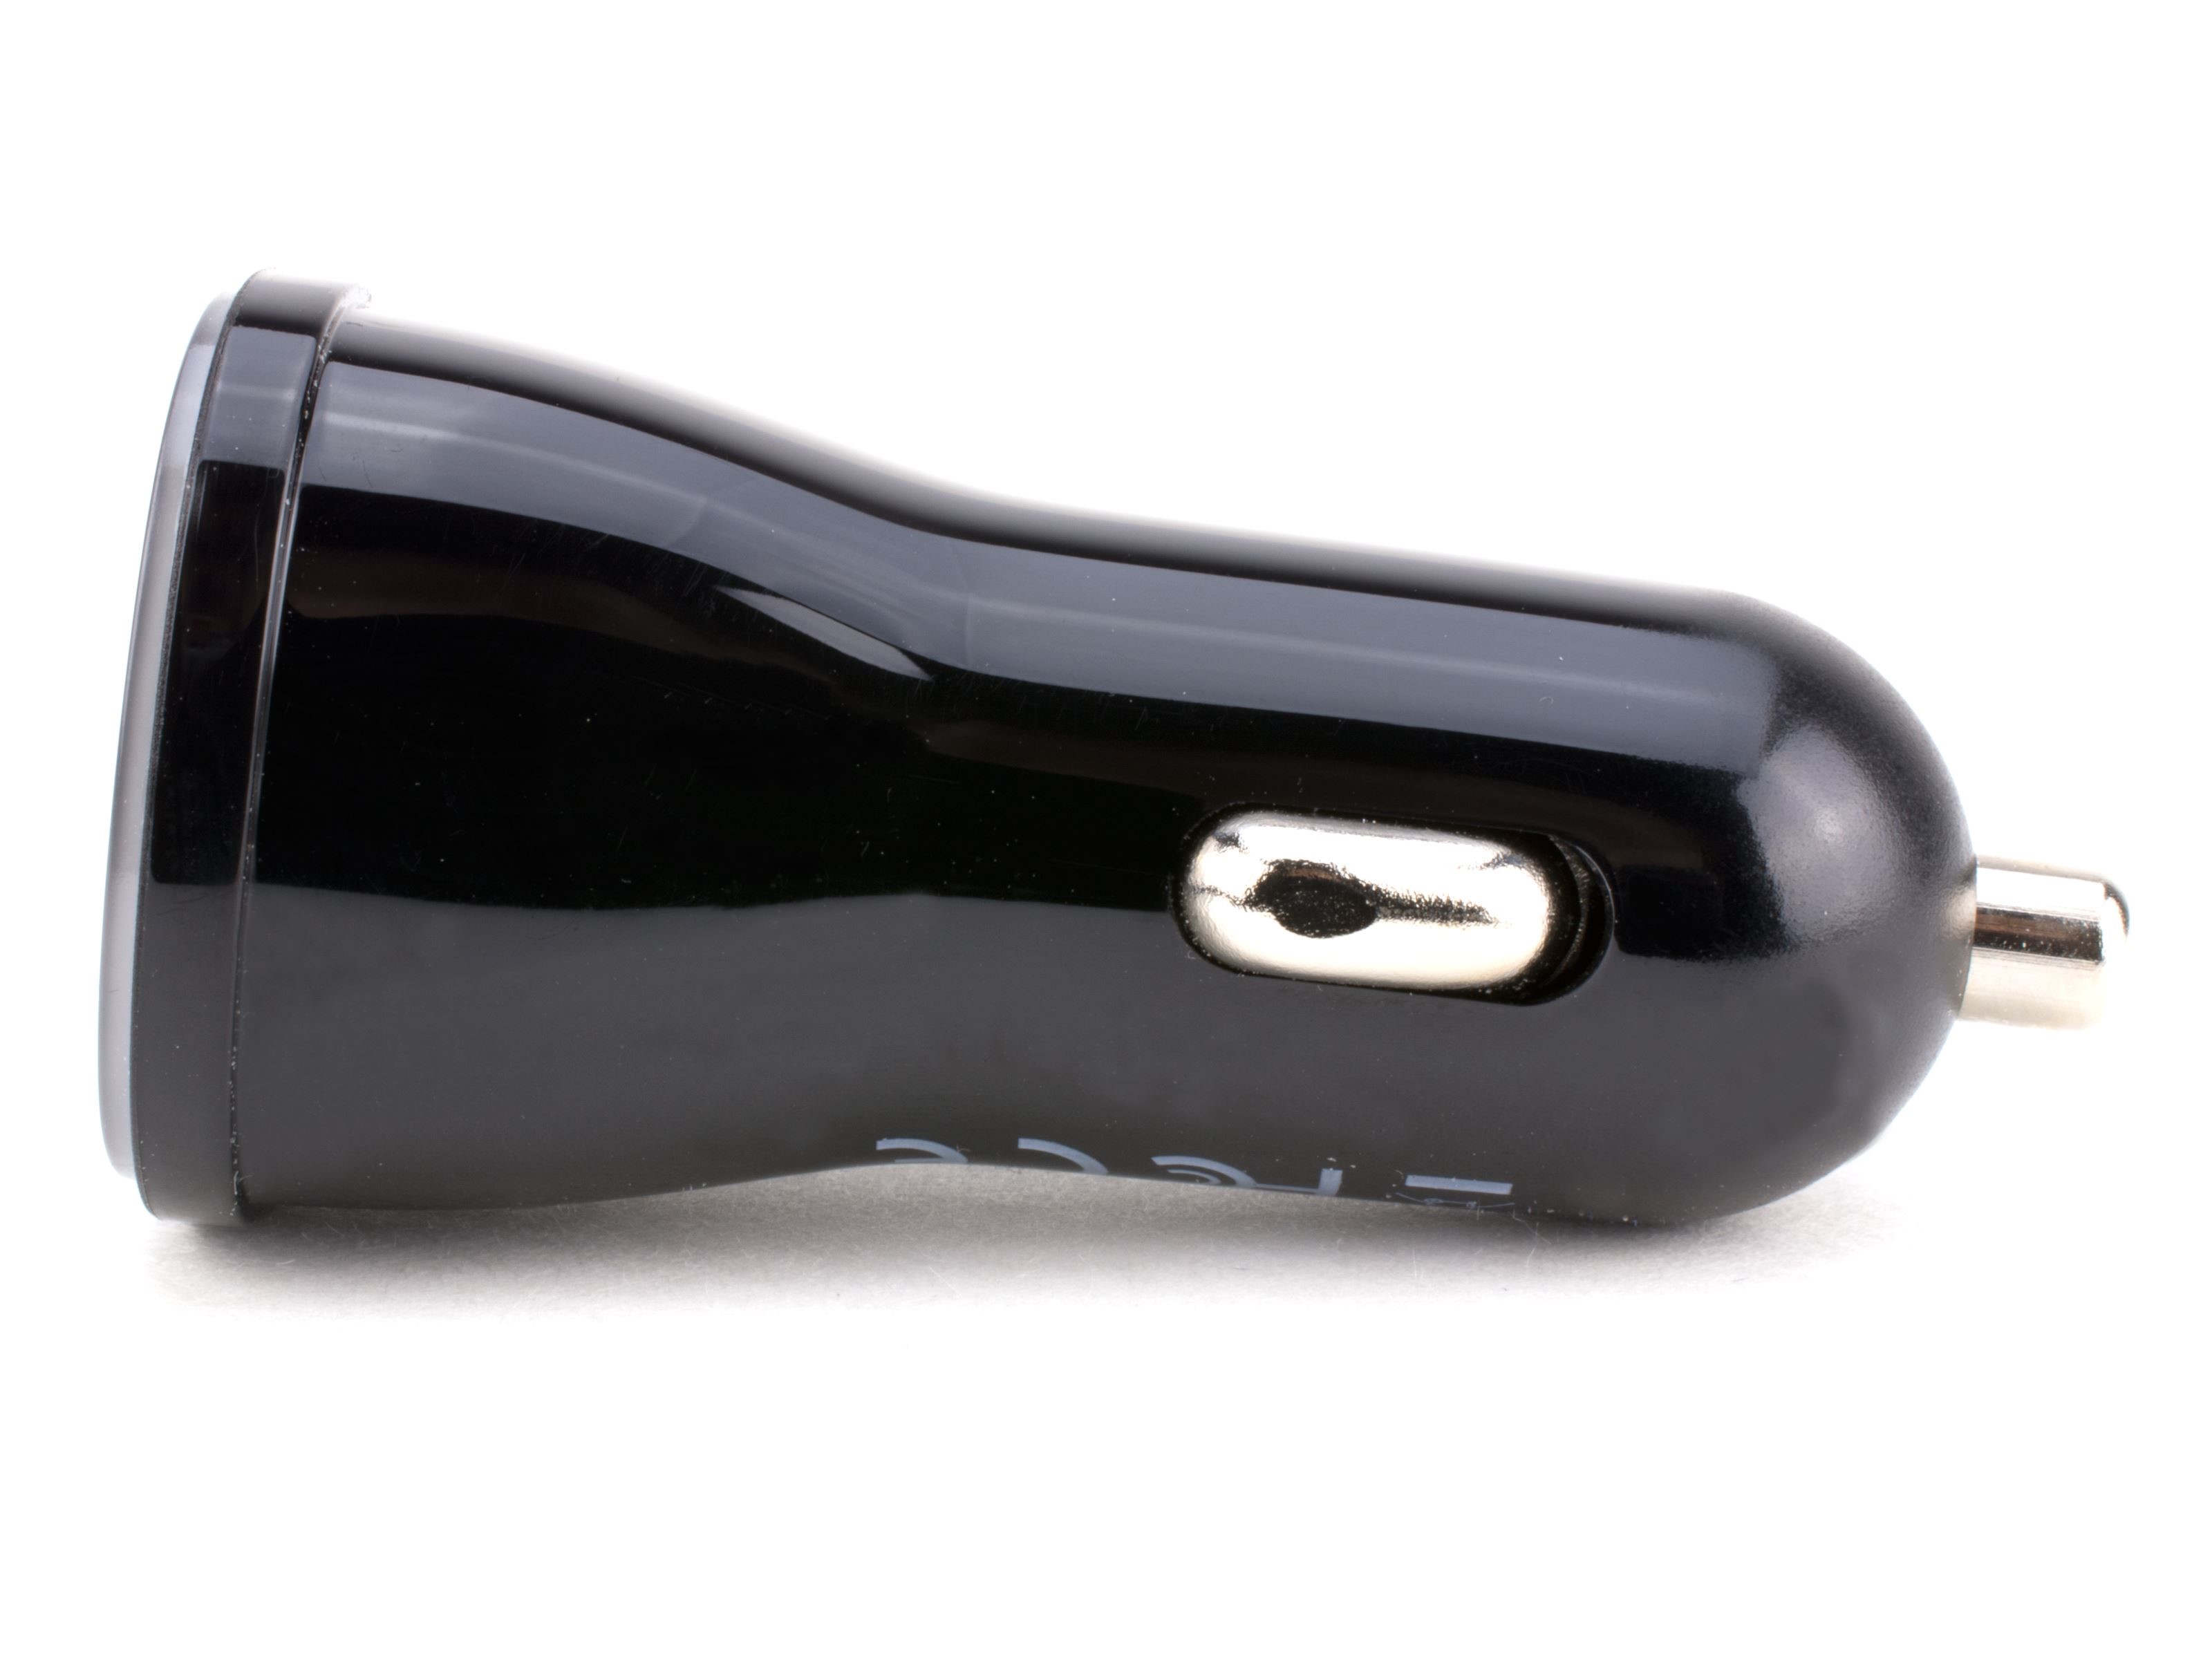 USB Car Charger - 2 Port, 5V 1A/2.1A, Black - Vivid AV® Official Site